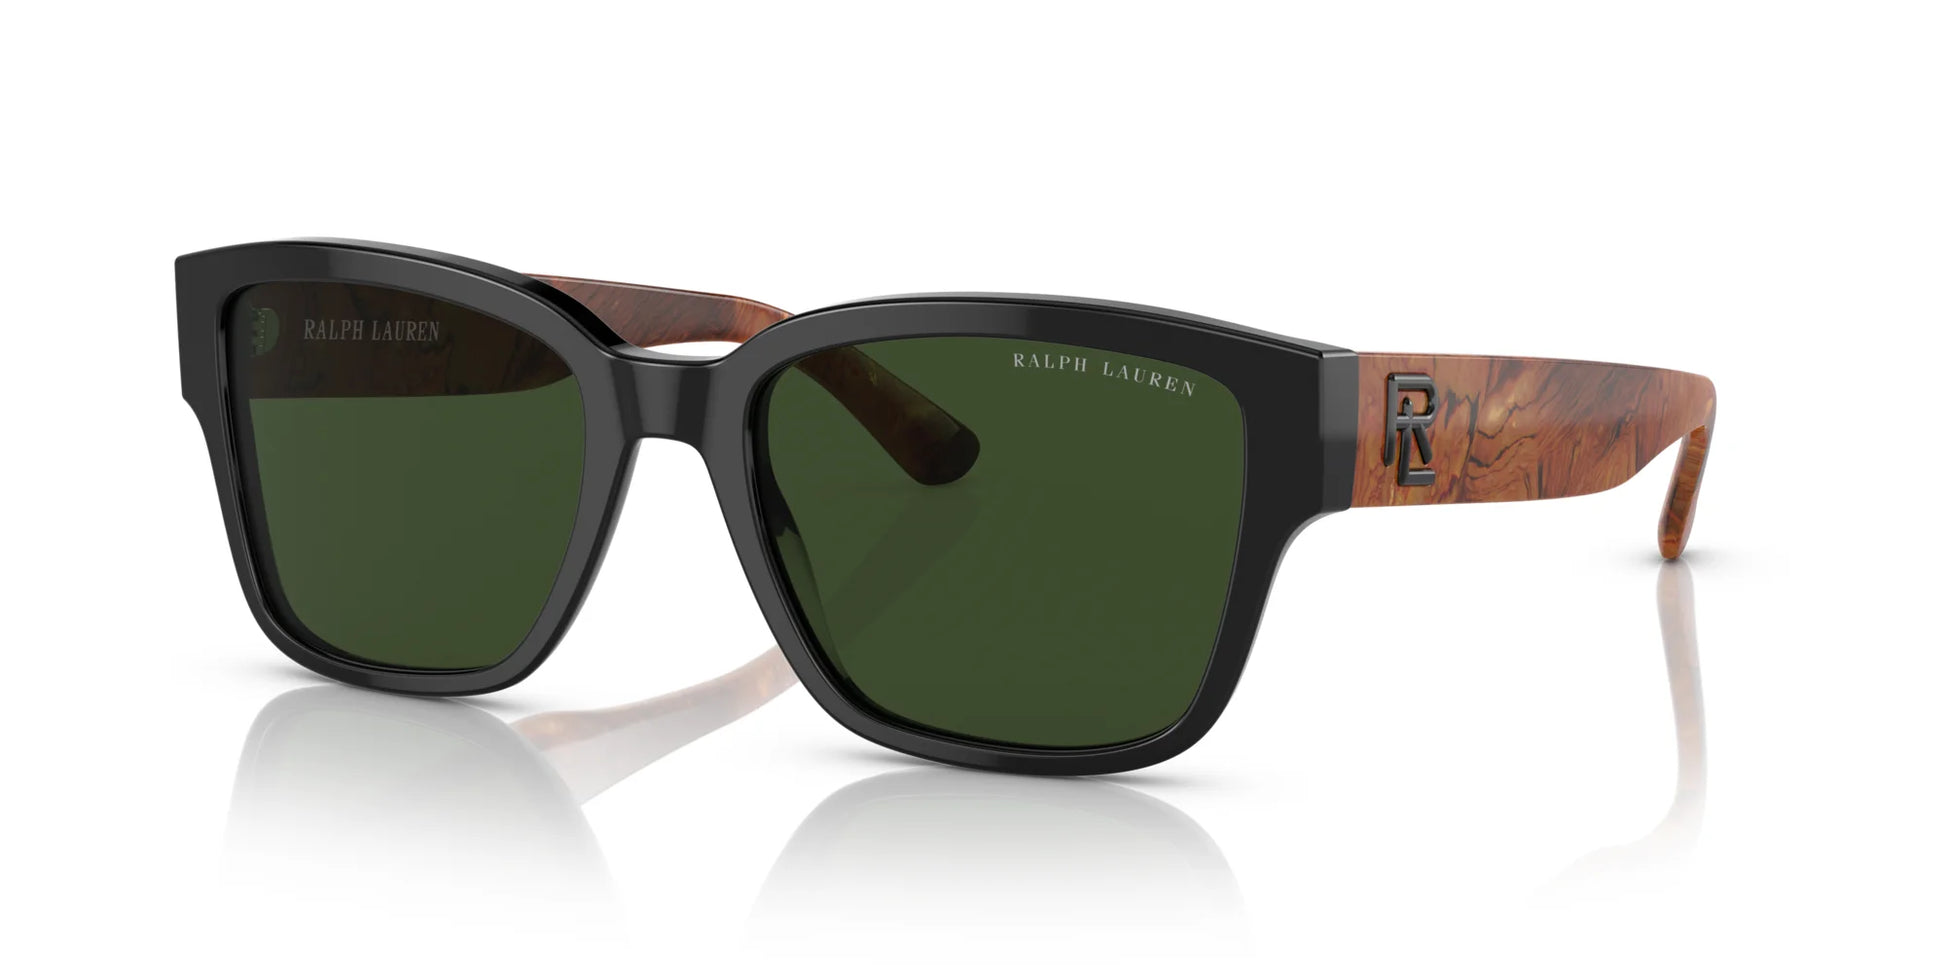 Ralph Lauren THE RL 50 RL8205 Sunglasses Shiny Black / Dark Green